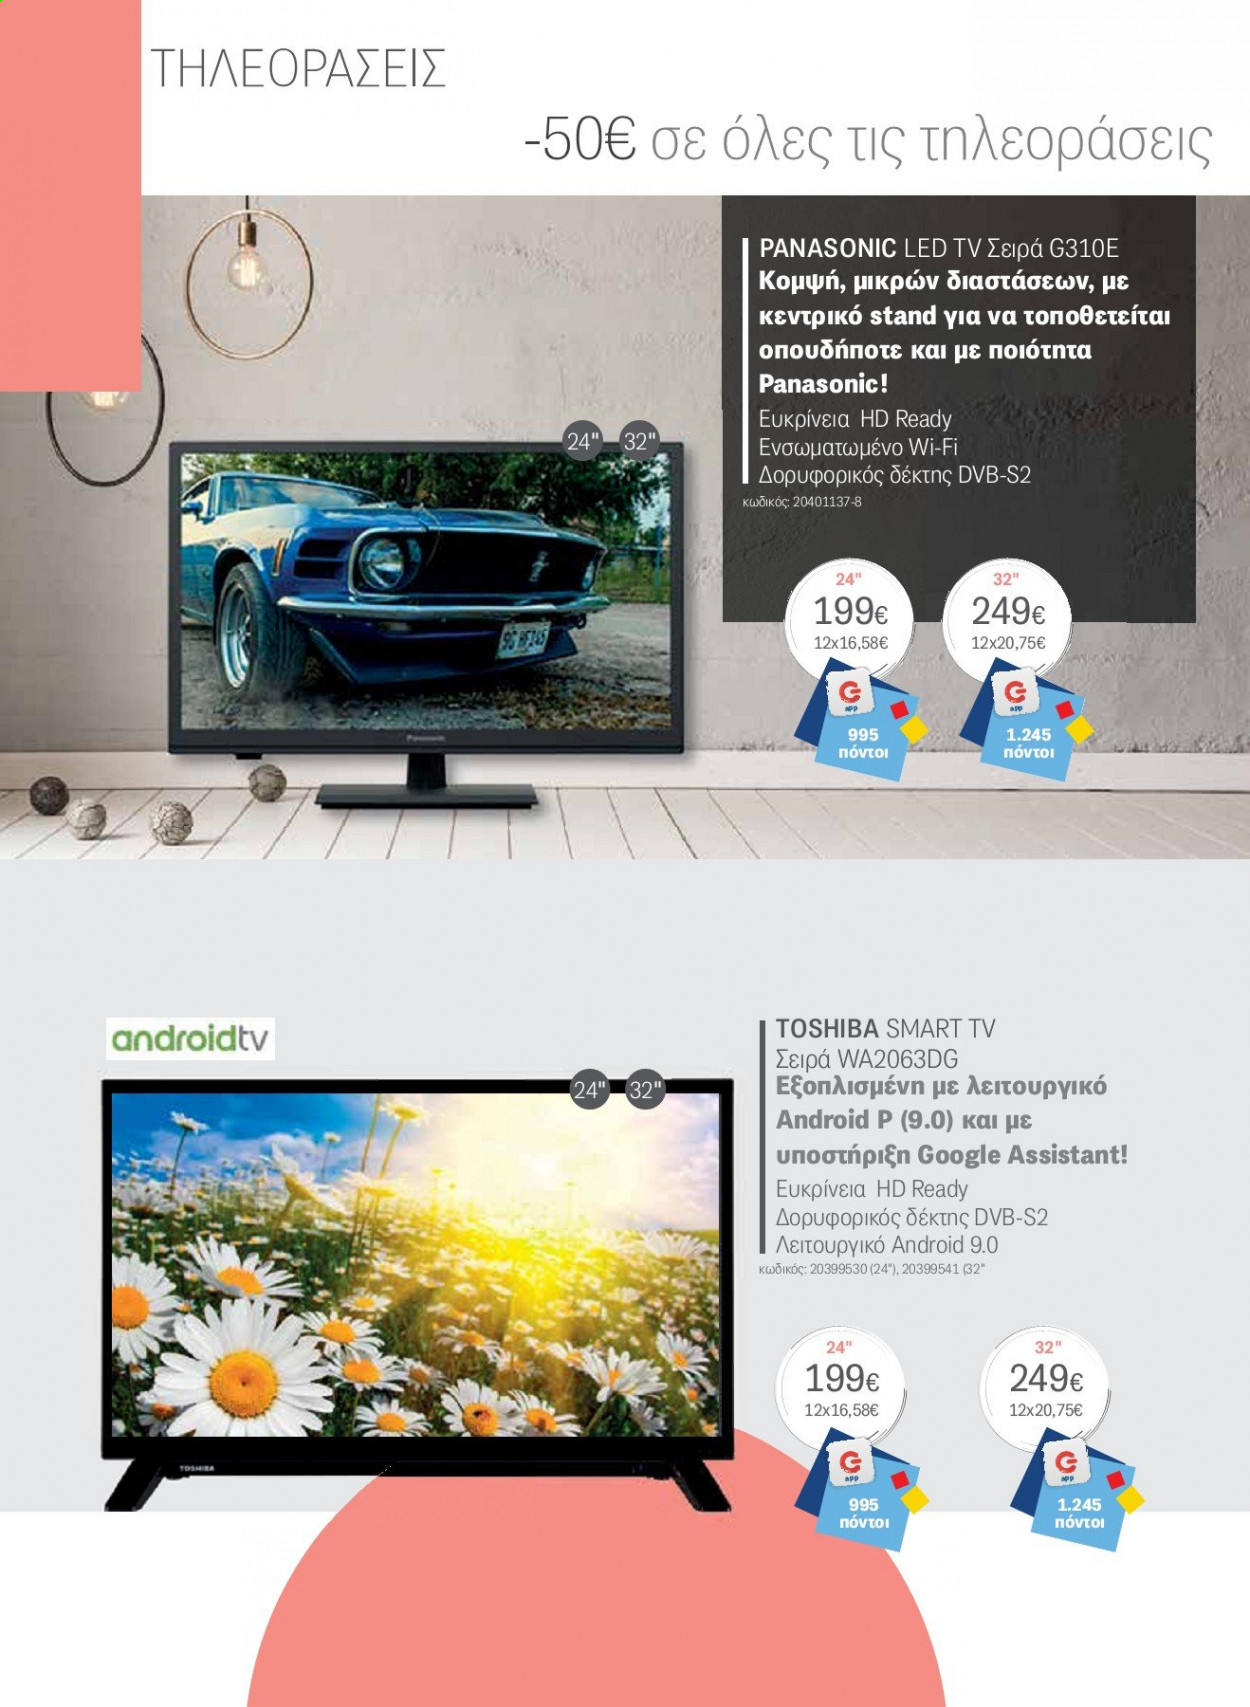 thumbnail - Φυλλάδια Germanos - Εκπτωτικά προϊόντα - Panasonic, Toshiba, LED TV, Smart TV. Σελίδα 82.